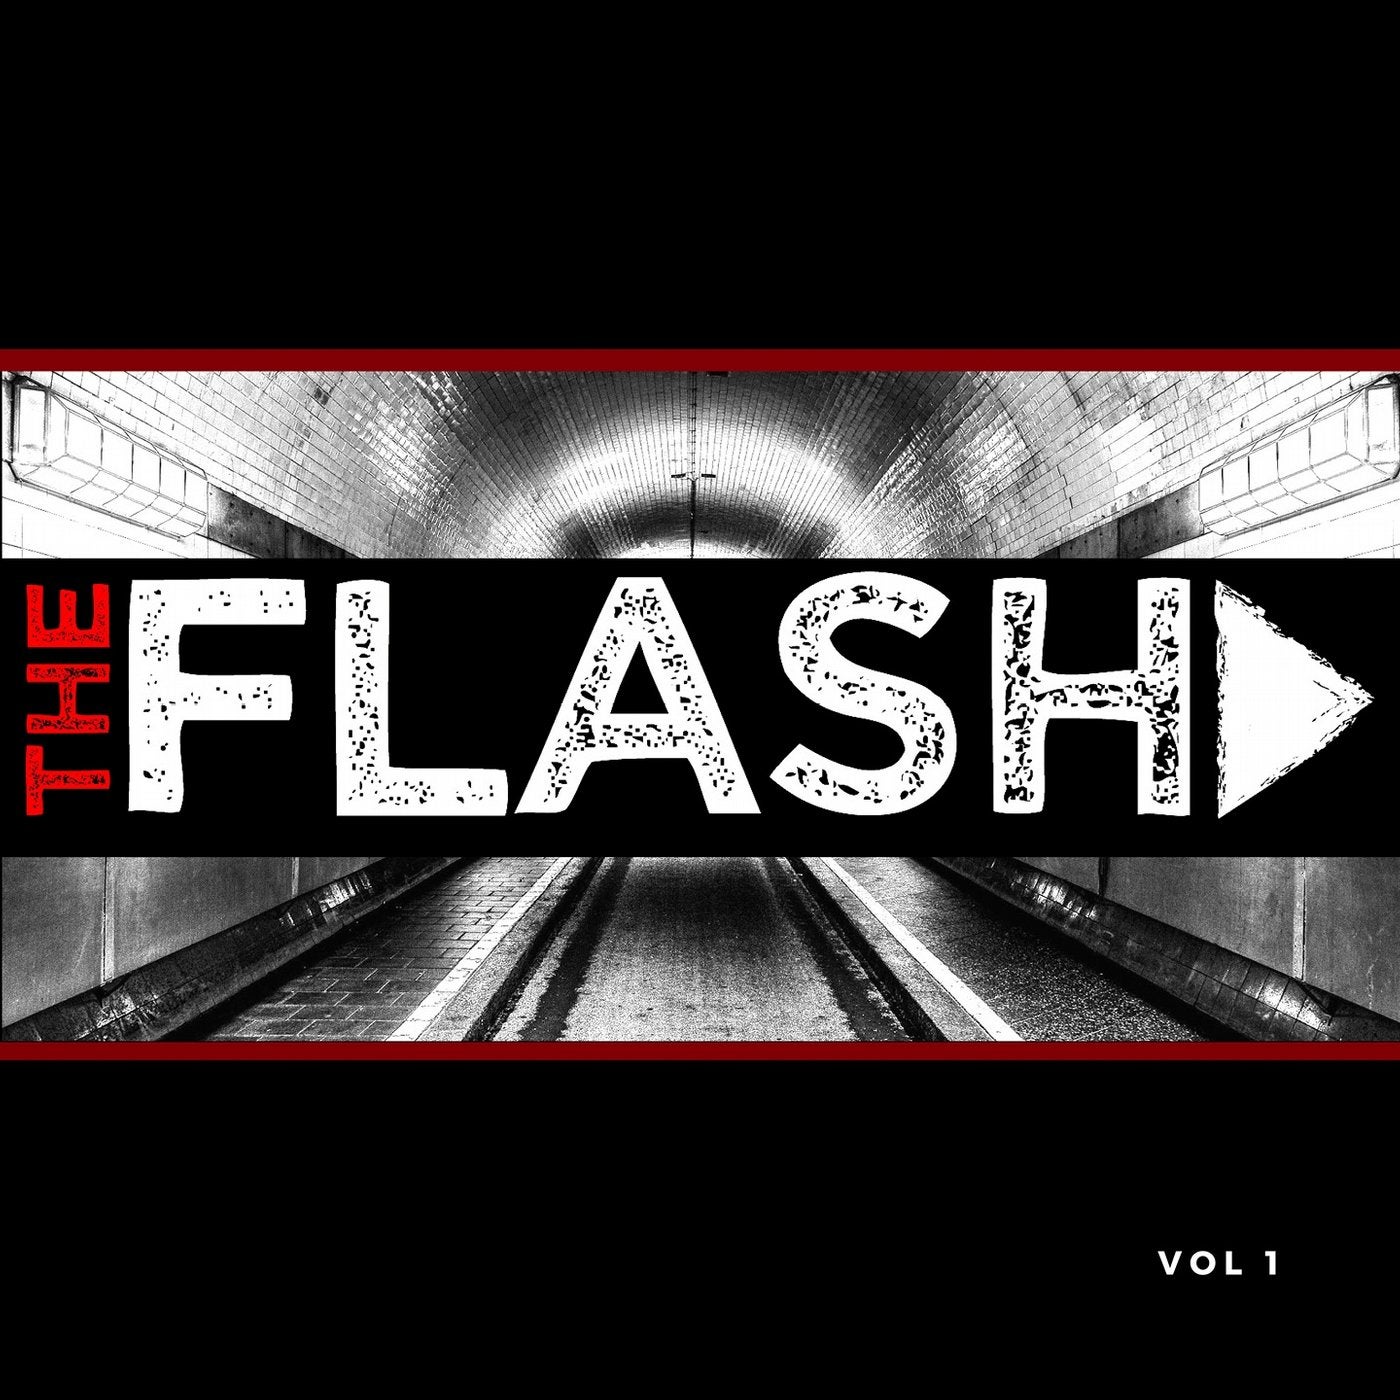 The Flash, Vol. 1